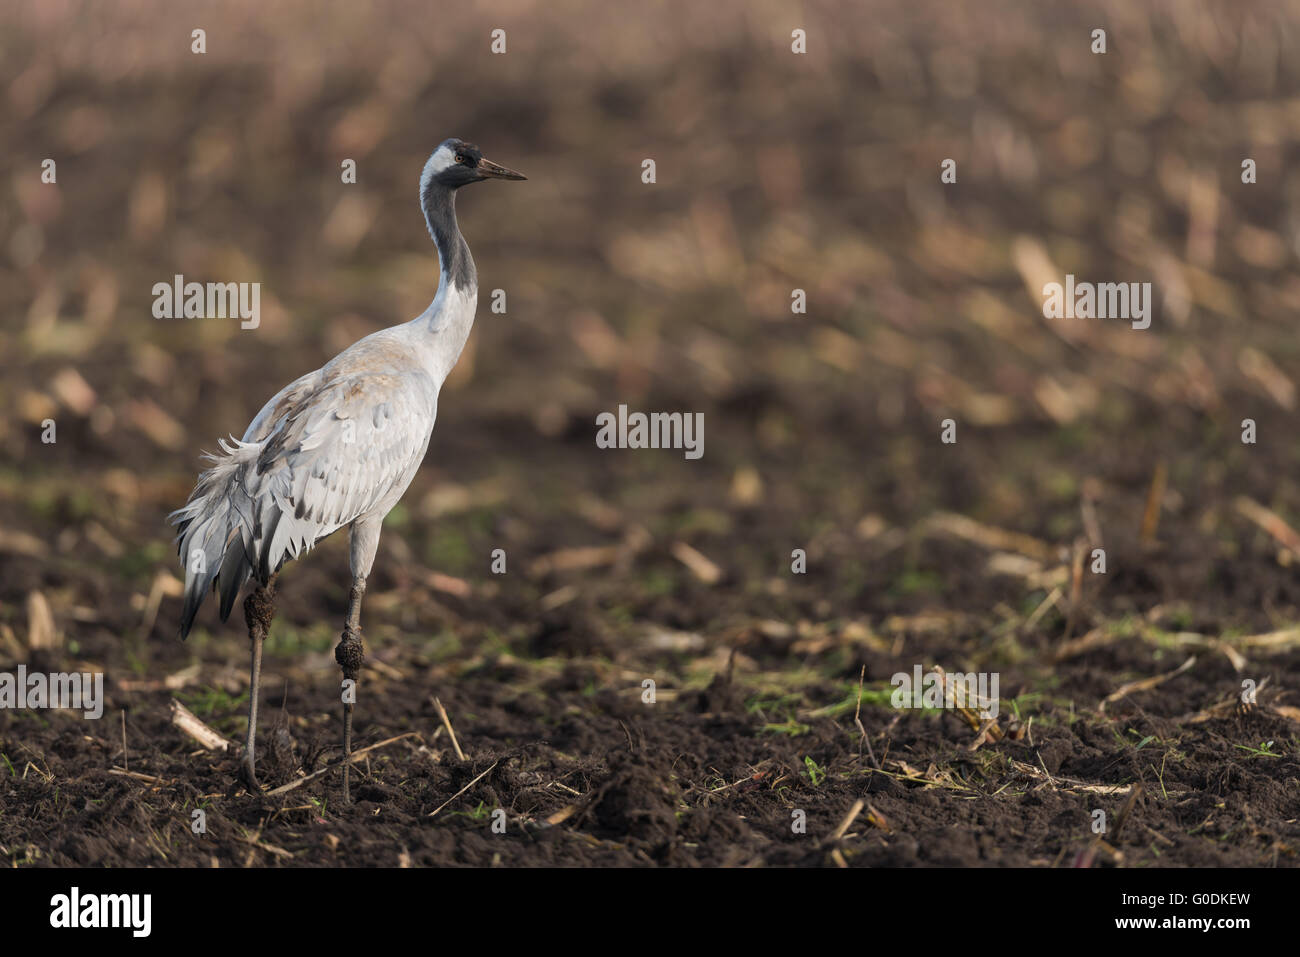 Common crane from Germany Stock Photo